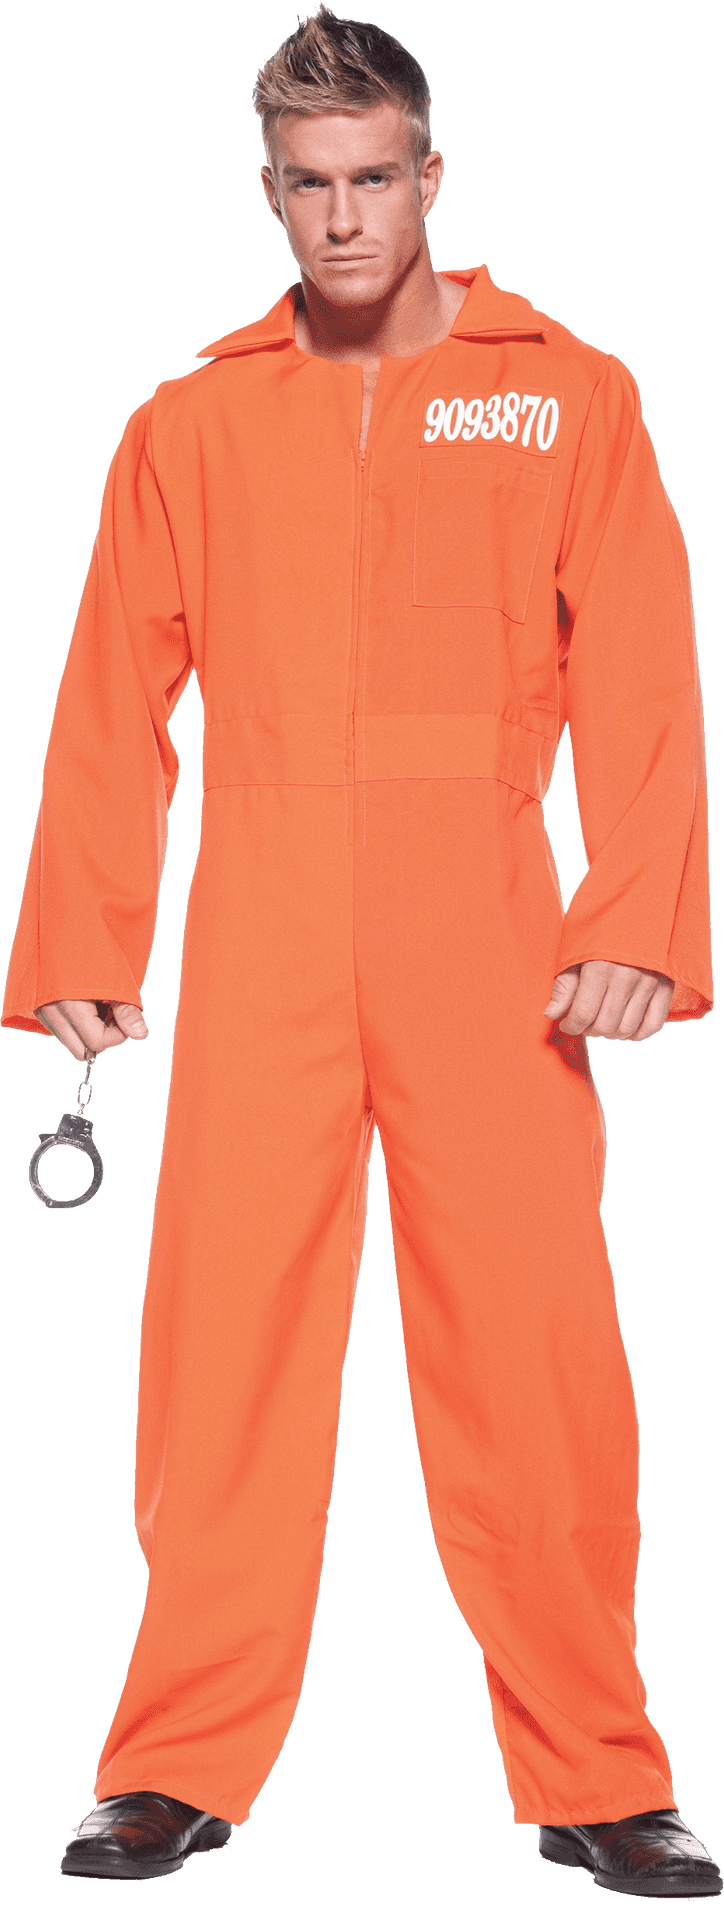 Manin Orange Prison Jumpsuit PNG image